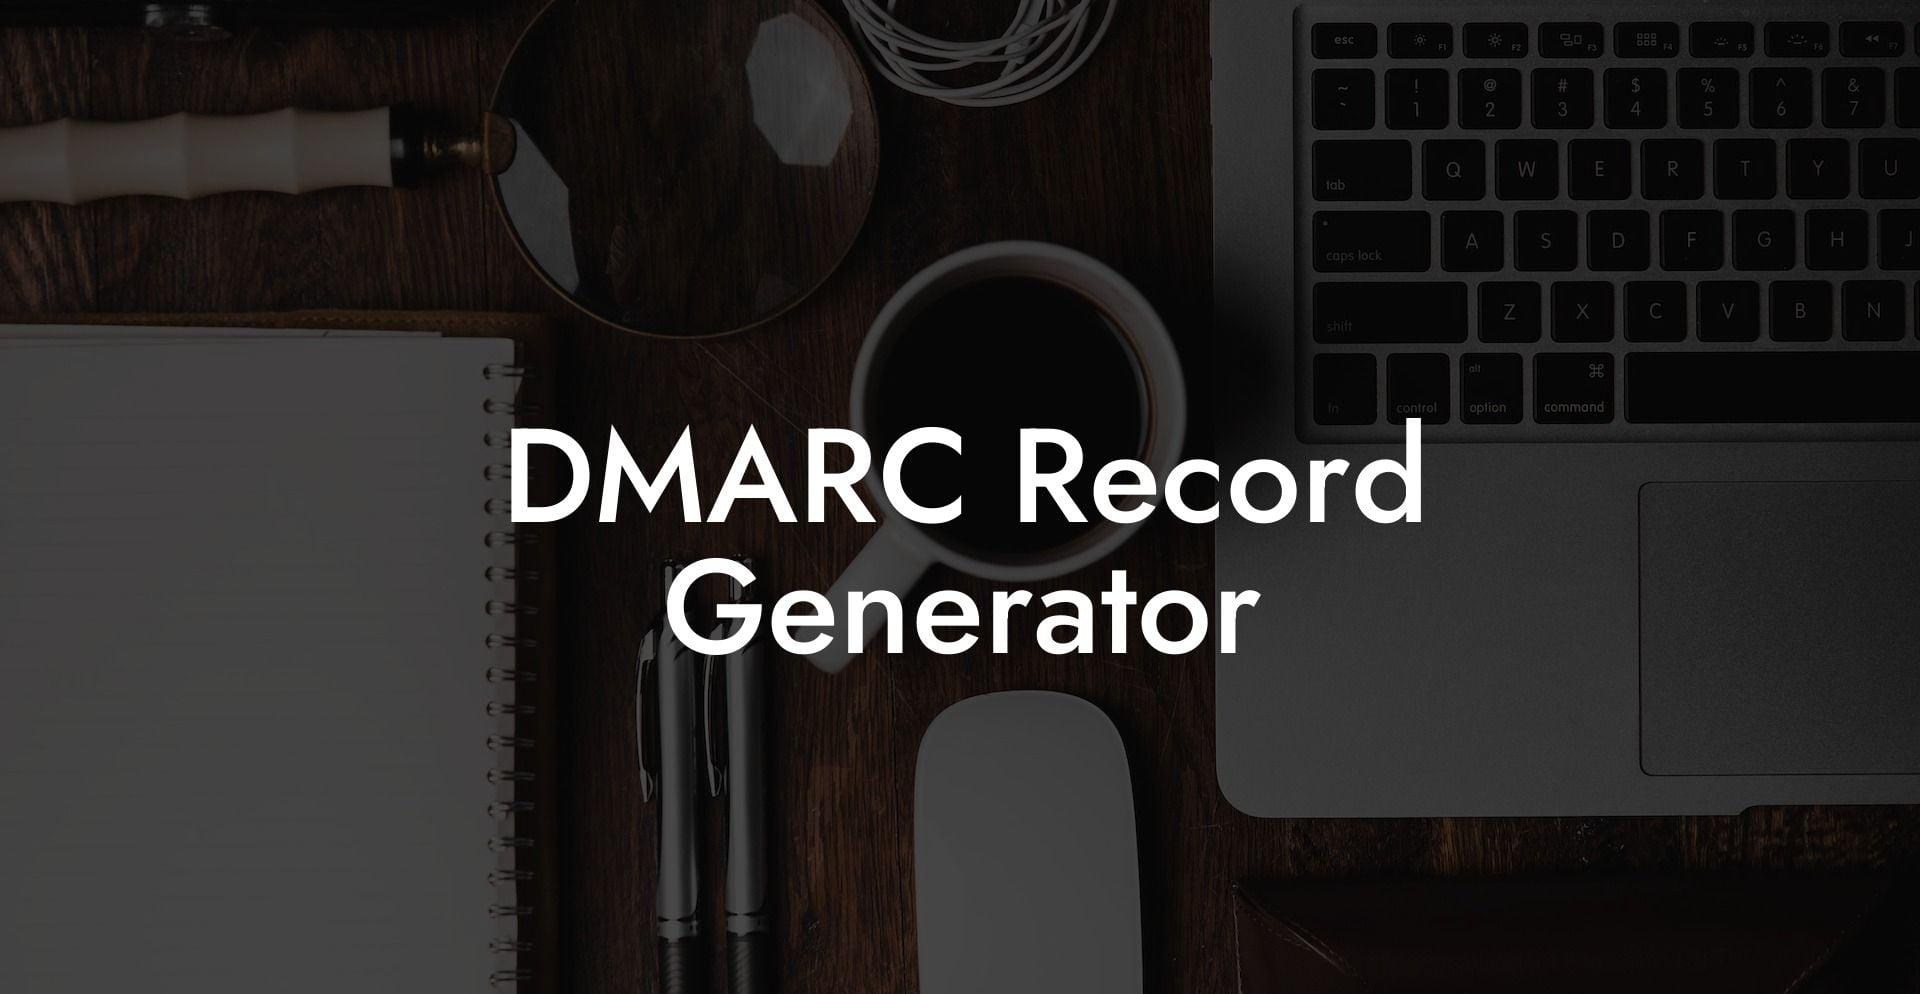 DMARC Record Generator